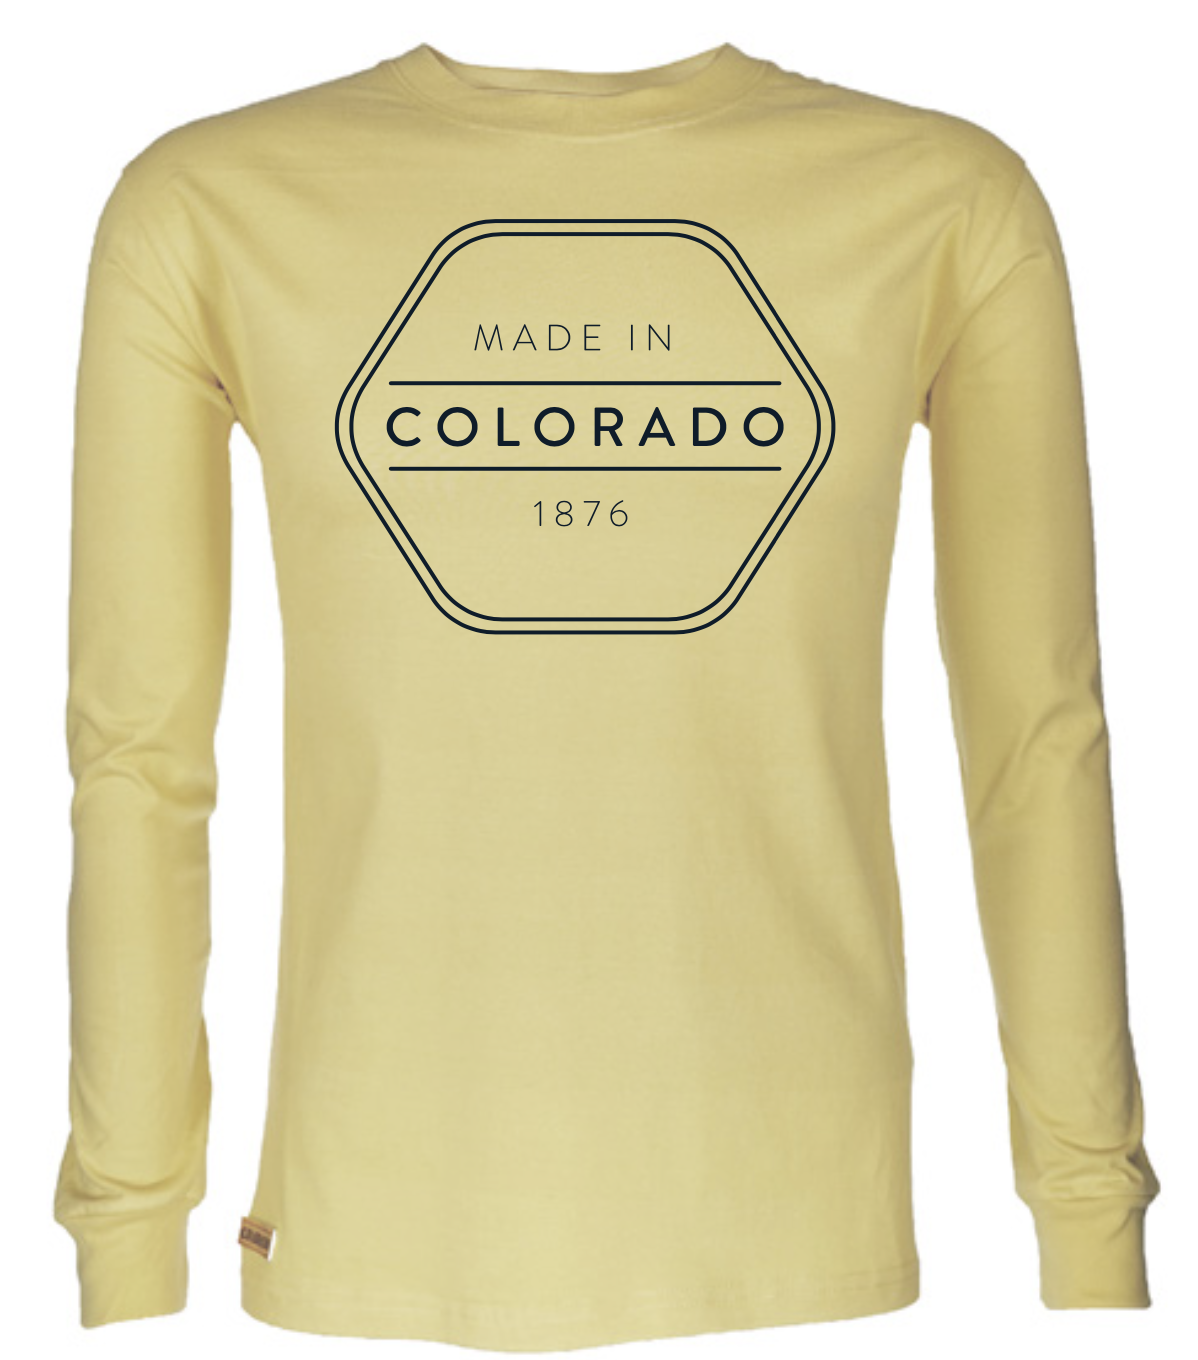 Made in Colorado Long Sleeve Shirt